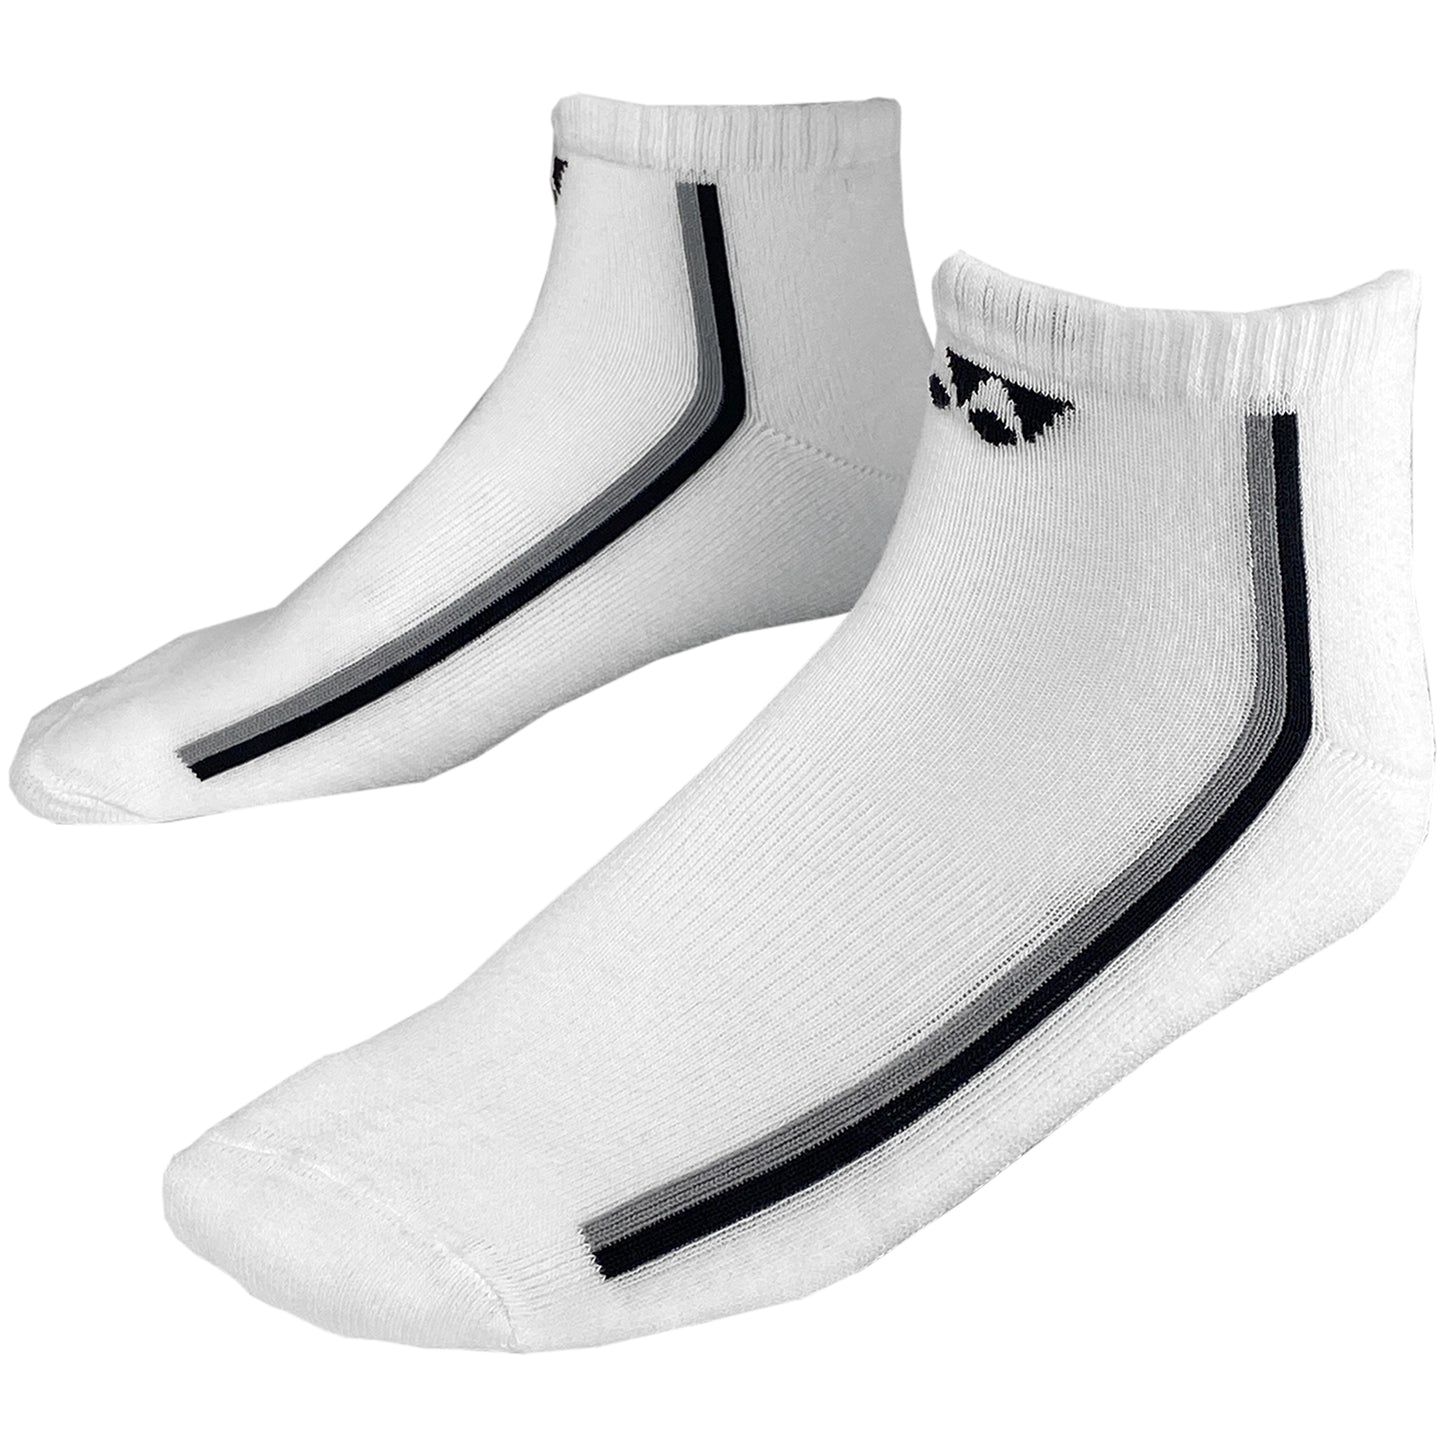 Yonex Low Cut Sport Socks 19190EX (pack of 3) White